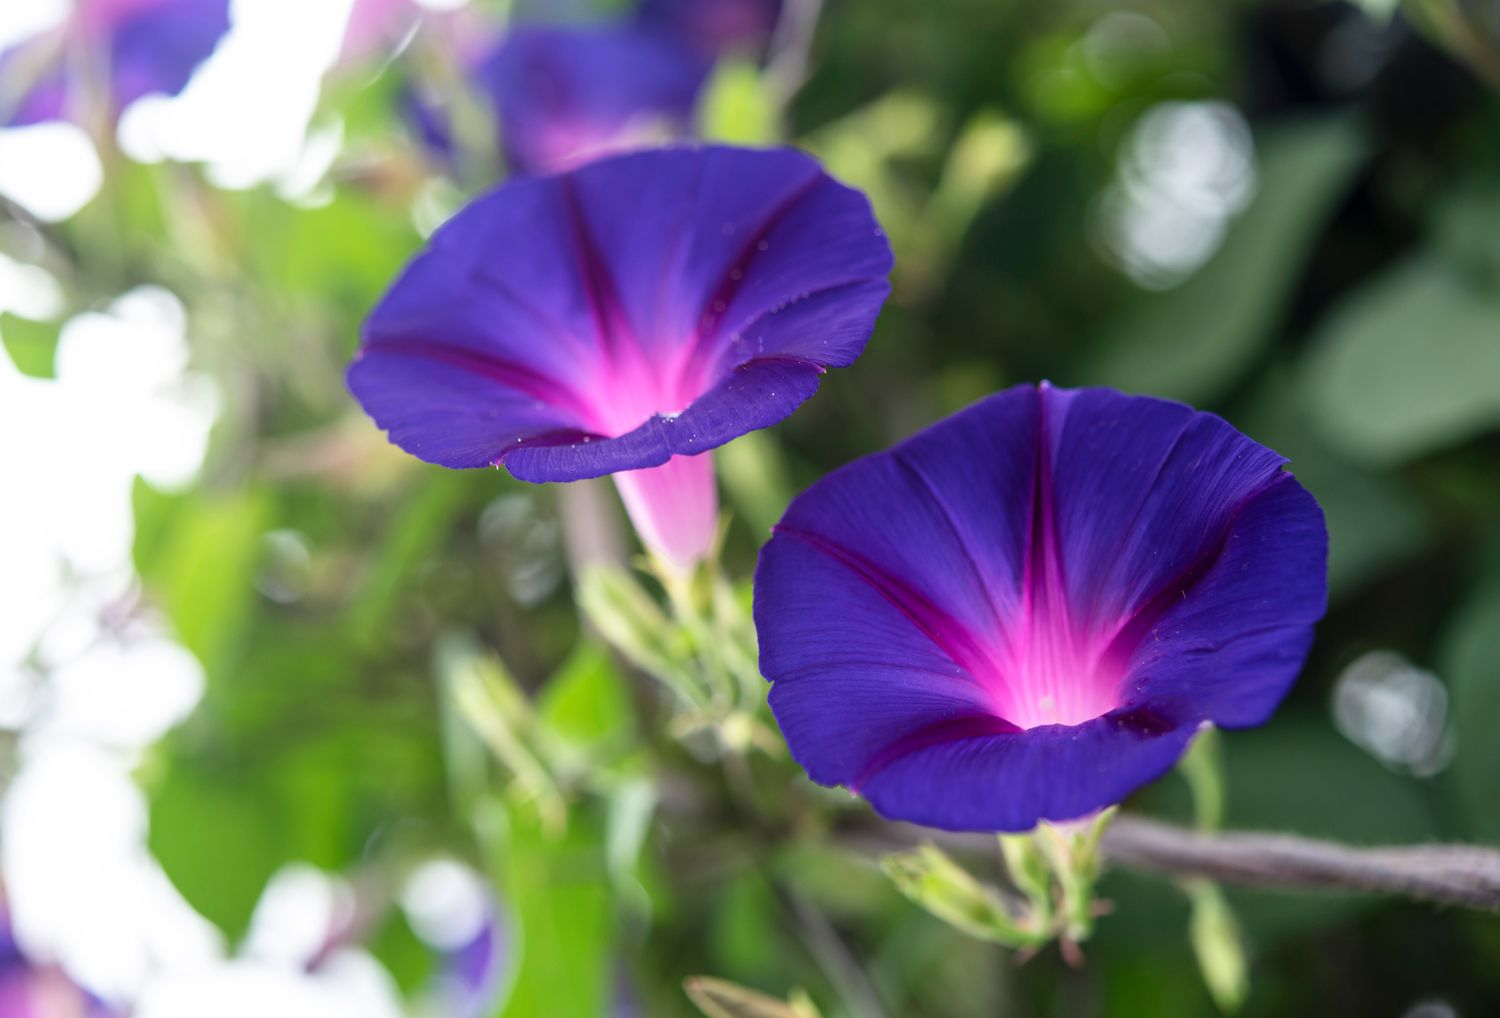 Morning Glory Blume mit violetten Blütenblättern 